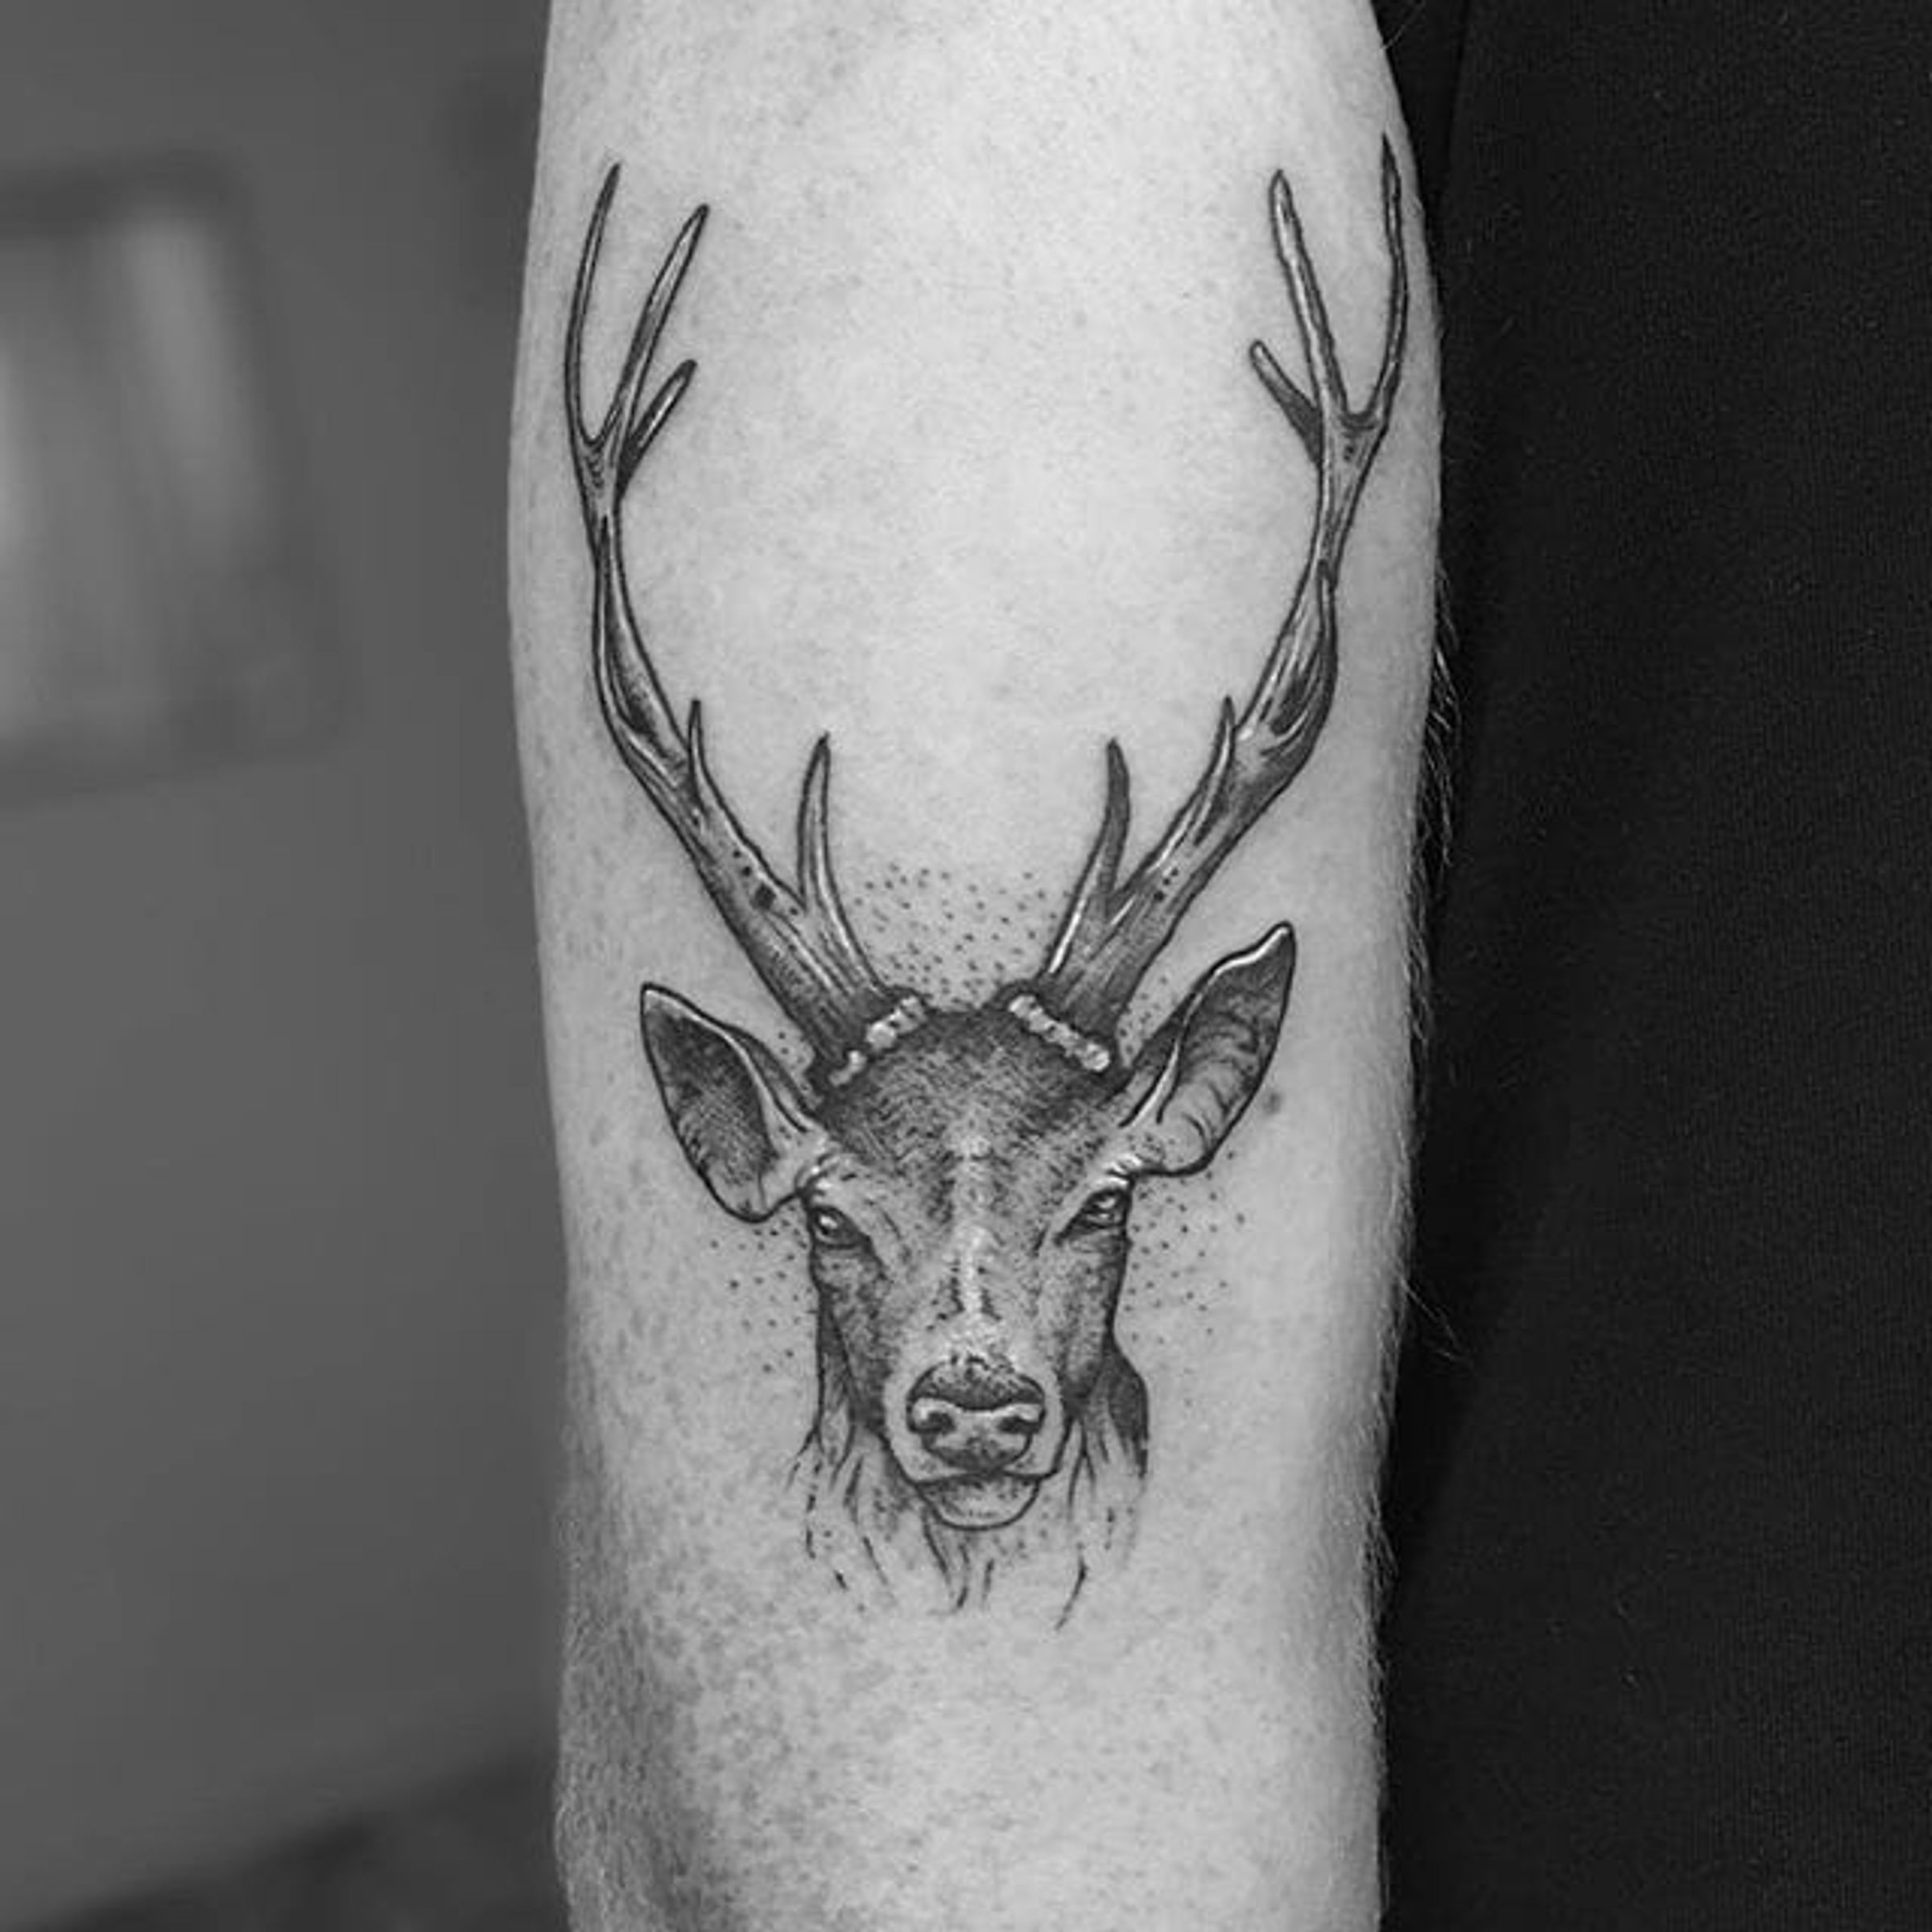 Tattoo uploaded by Robert Davies • Blackwork Stag Tattoo by Tom Tom ...